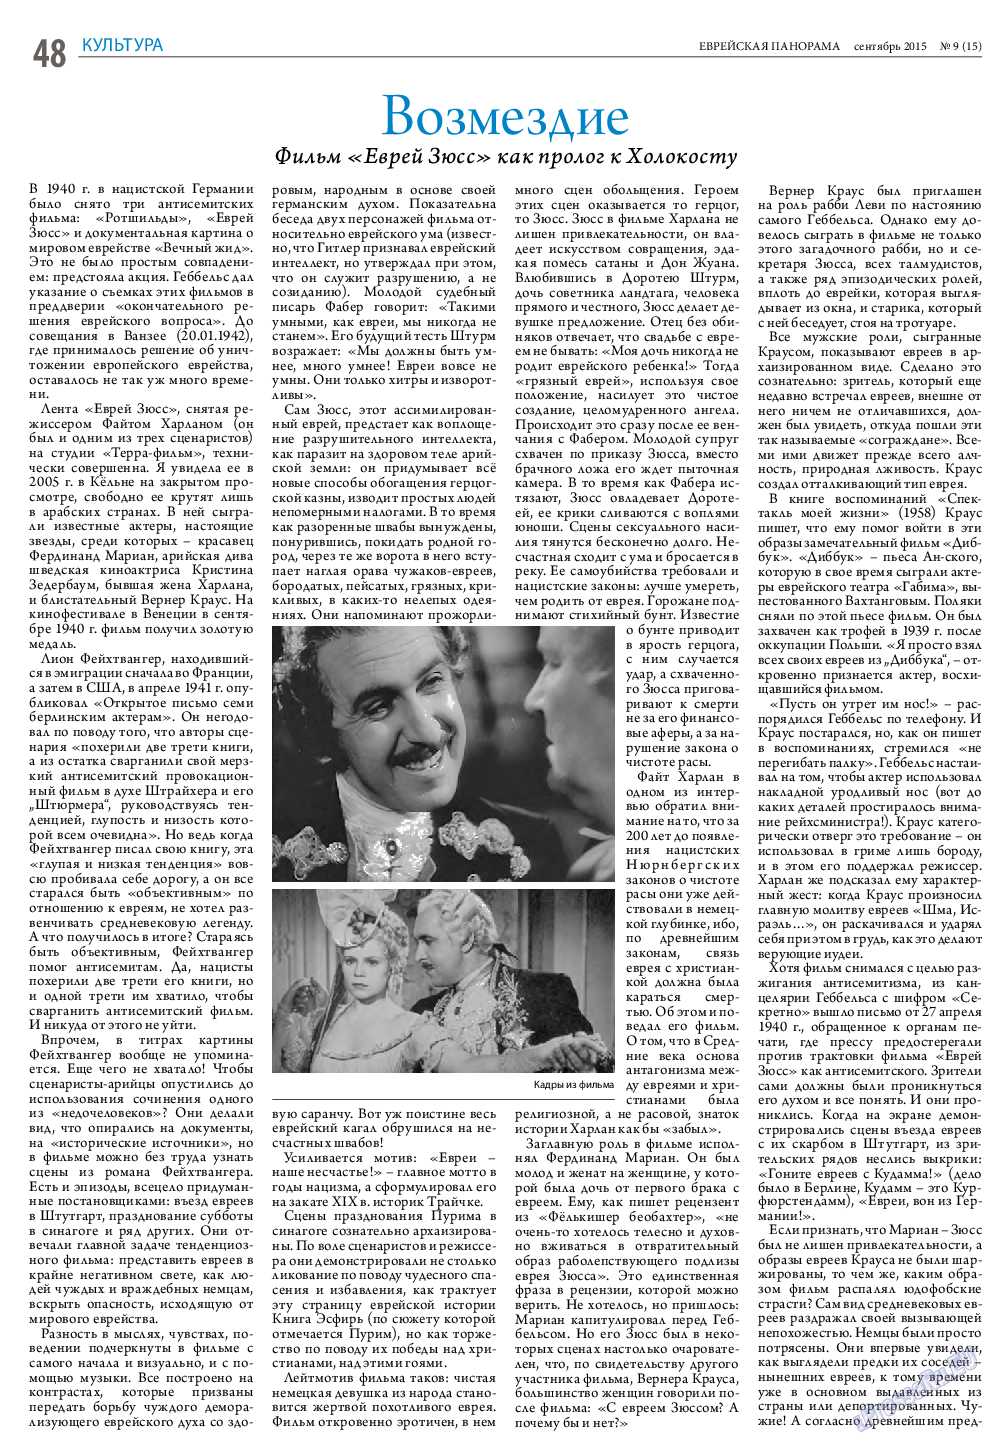 Еврейская панорама, газета. 2015 №9 стр.48